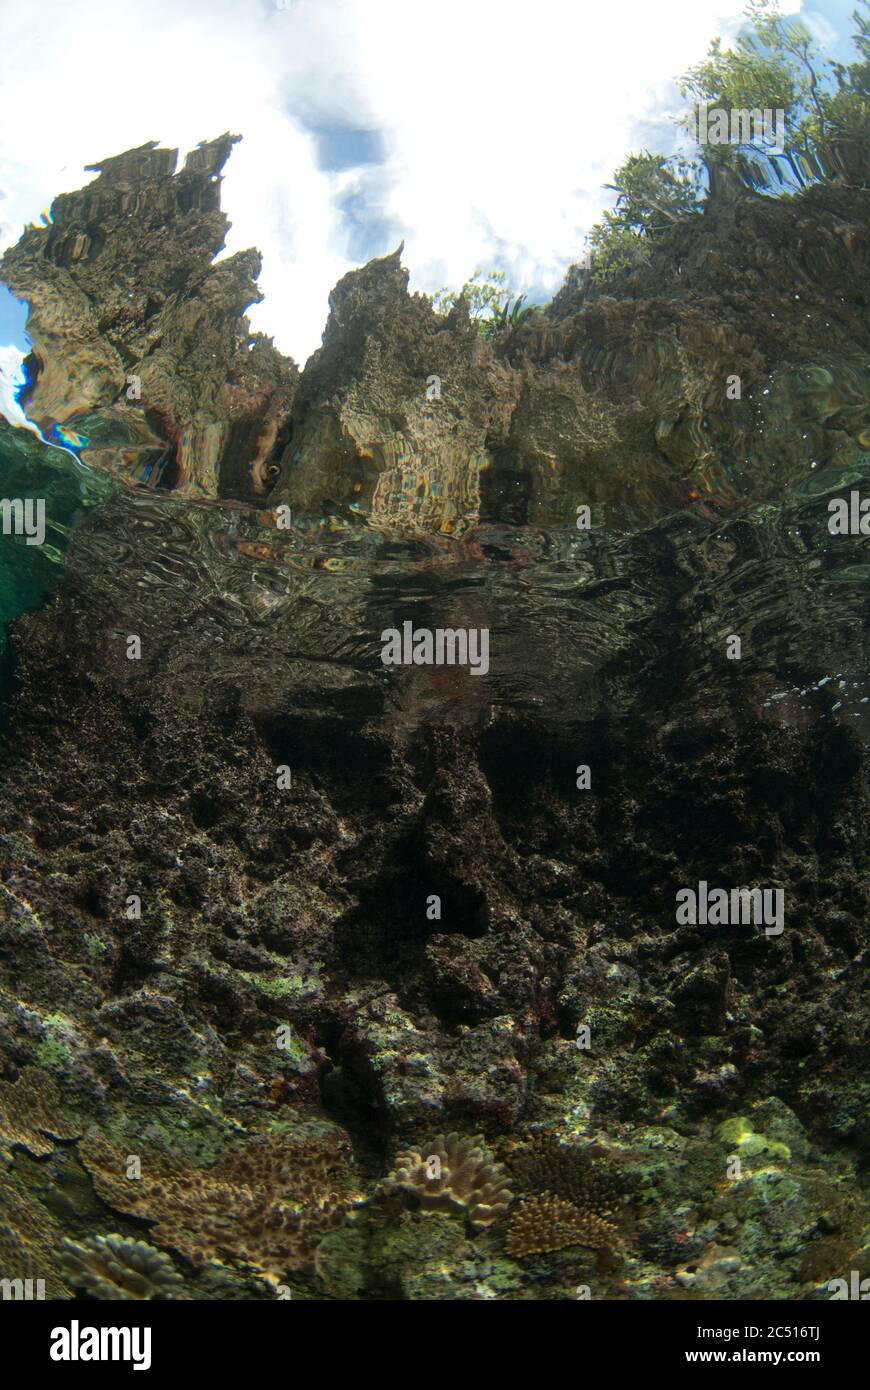 Insel unter Wasser, Potato Point Tauchplatz, Fiabacet Insel, Raja Ampat, West Papua, Indonesien Stockfoto